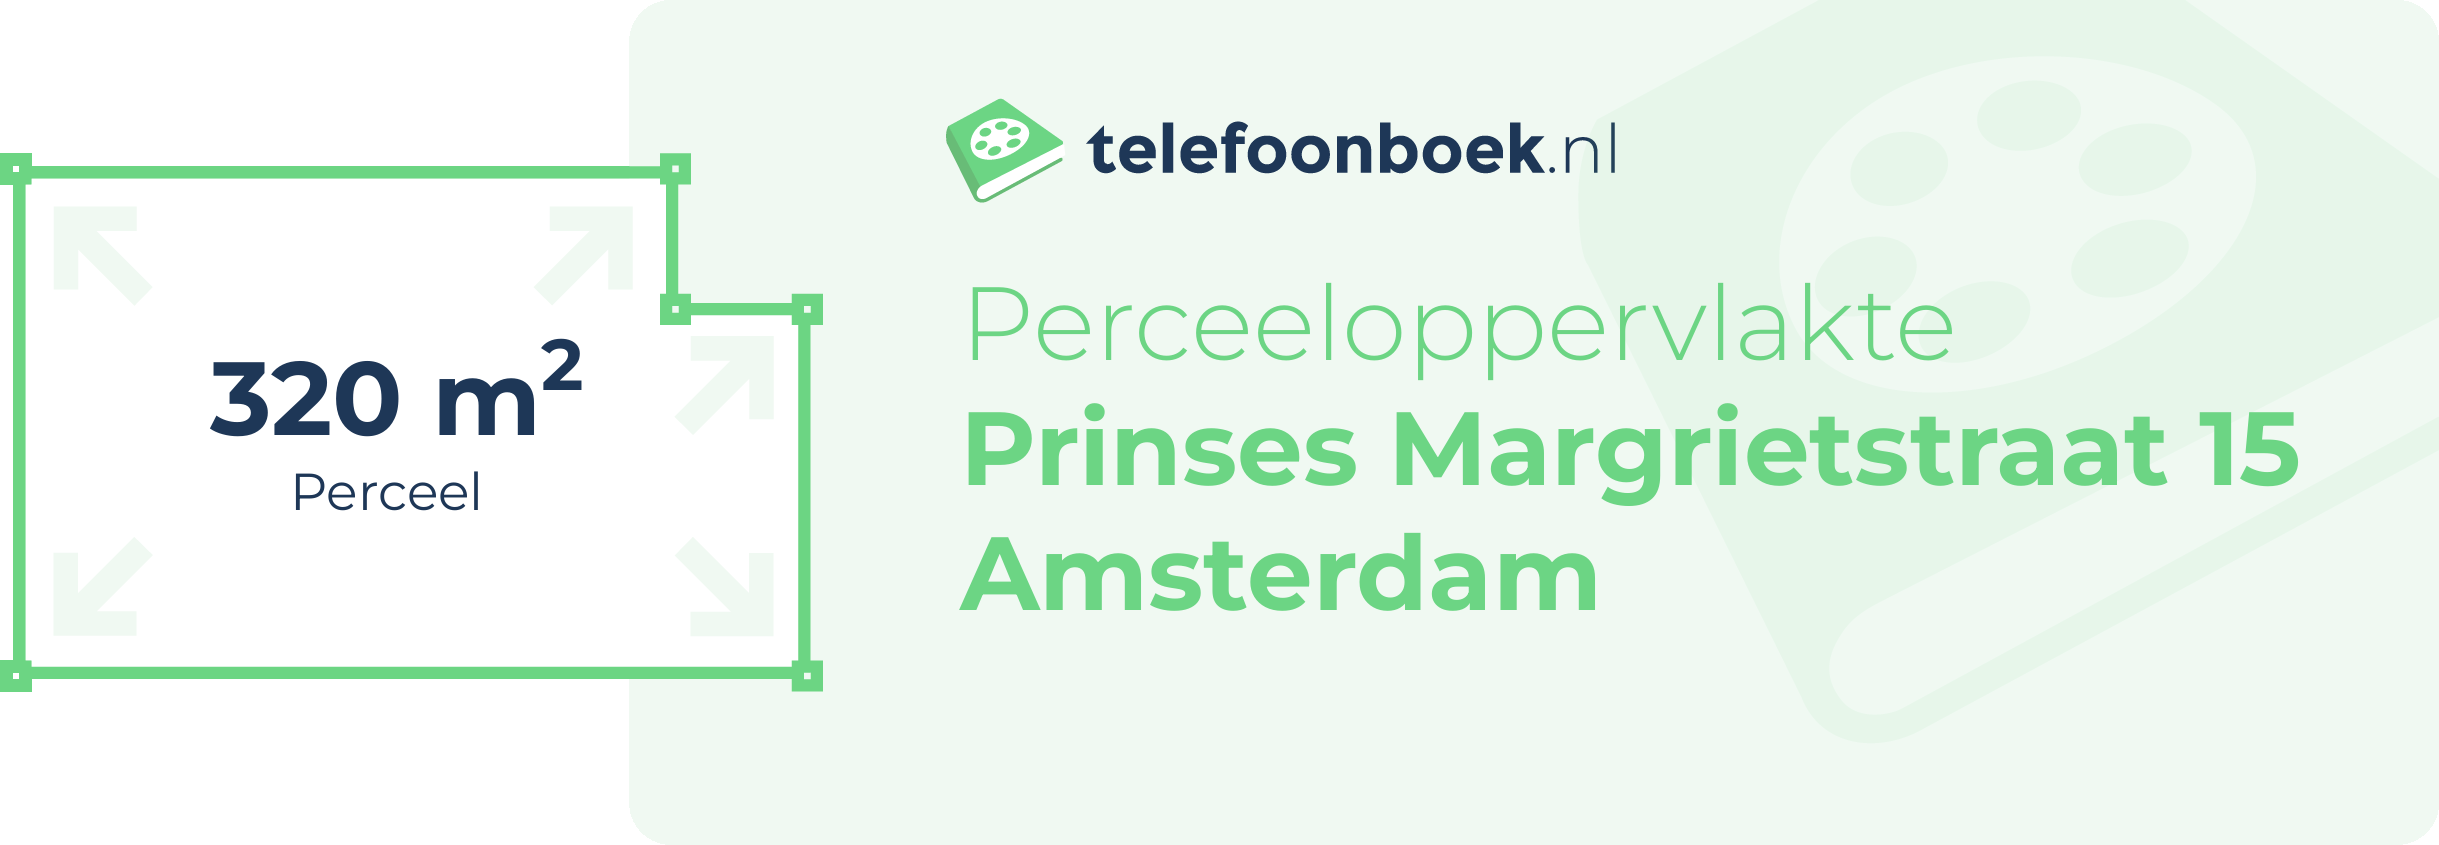 Perceeloppervlakte Prinses Margrietstraat 15 Amsterdam